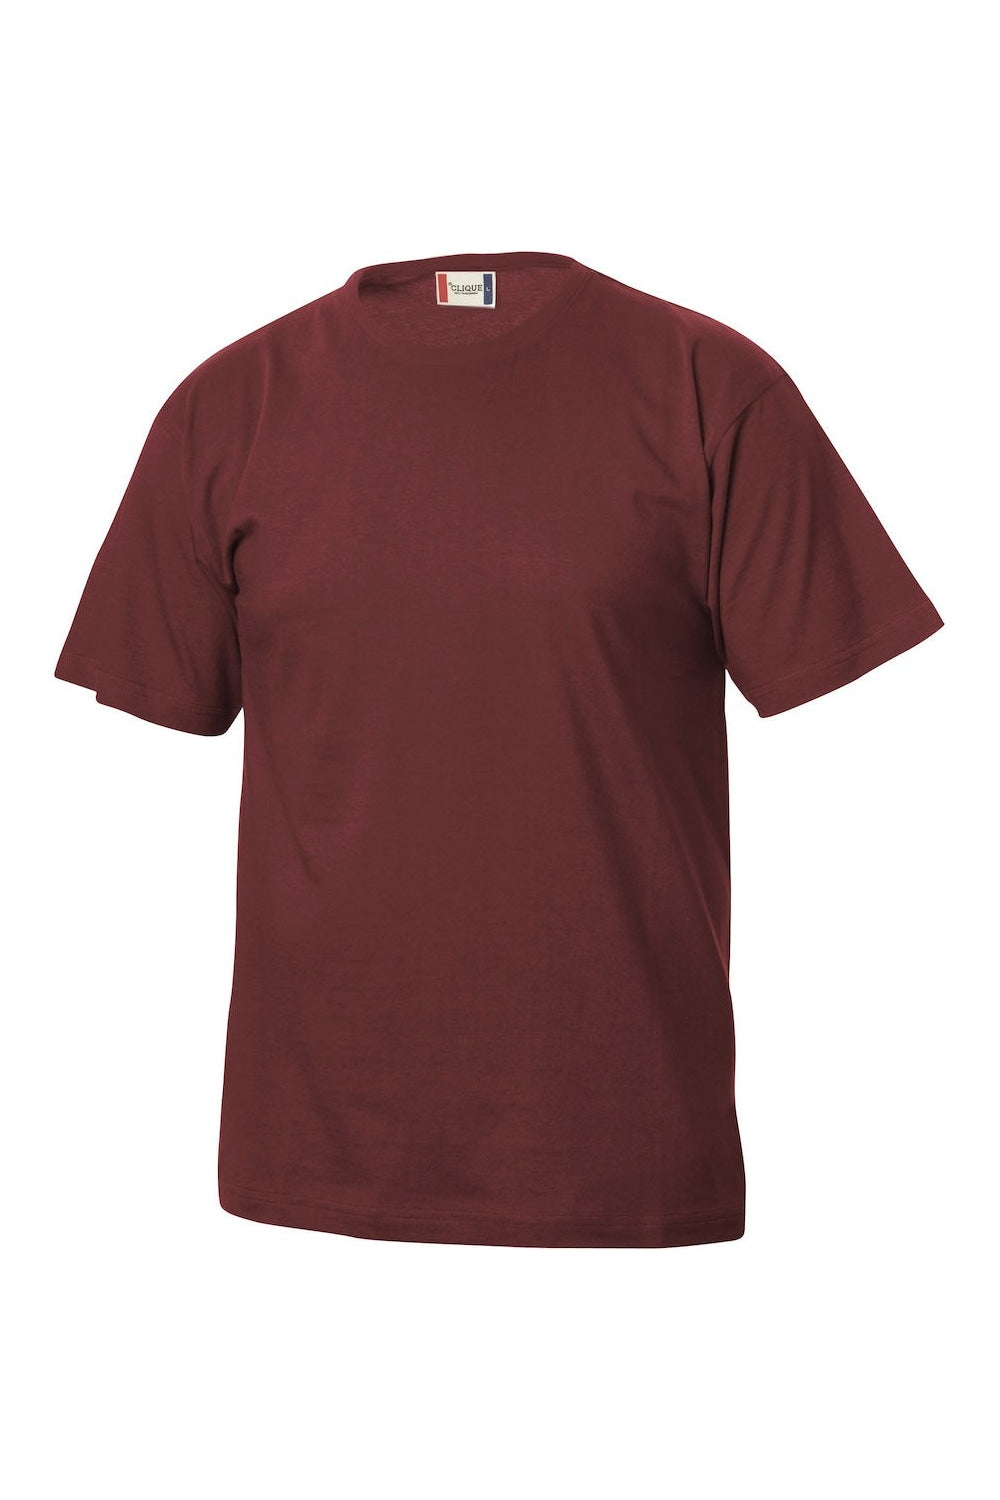 Childrens/Kids Basic T-Shirt - Burgundy